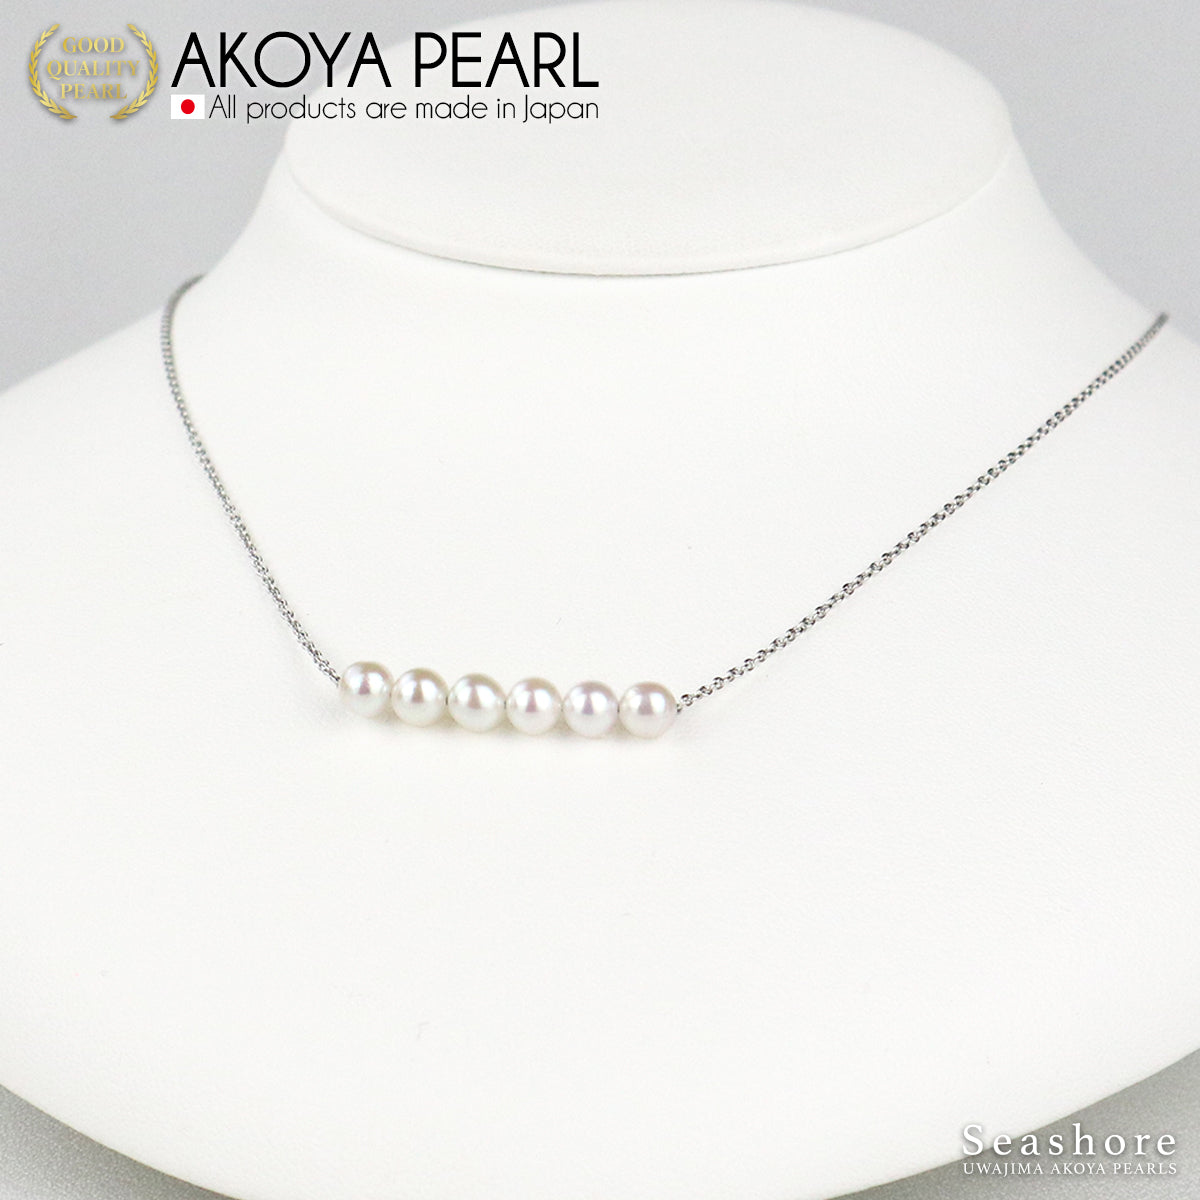 Baby pearl 6 bead bar necklace [4.5-5.0mm] SV925 Akoya pearl (3838)